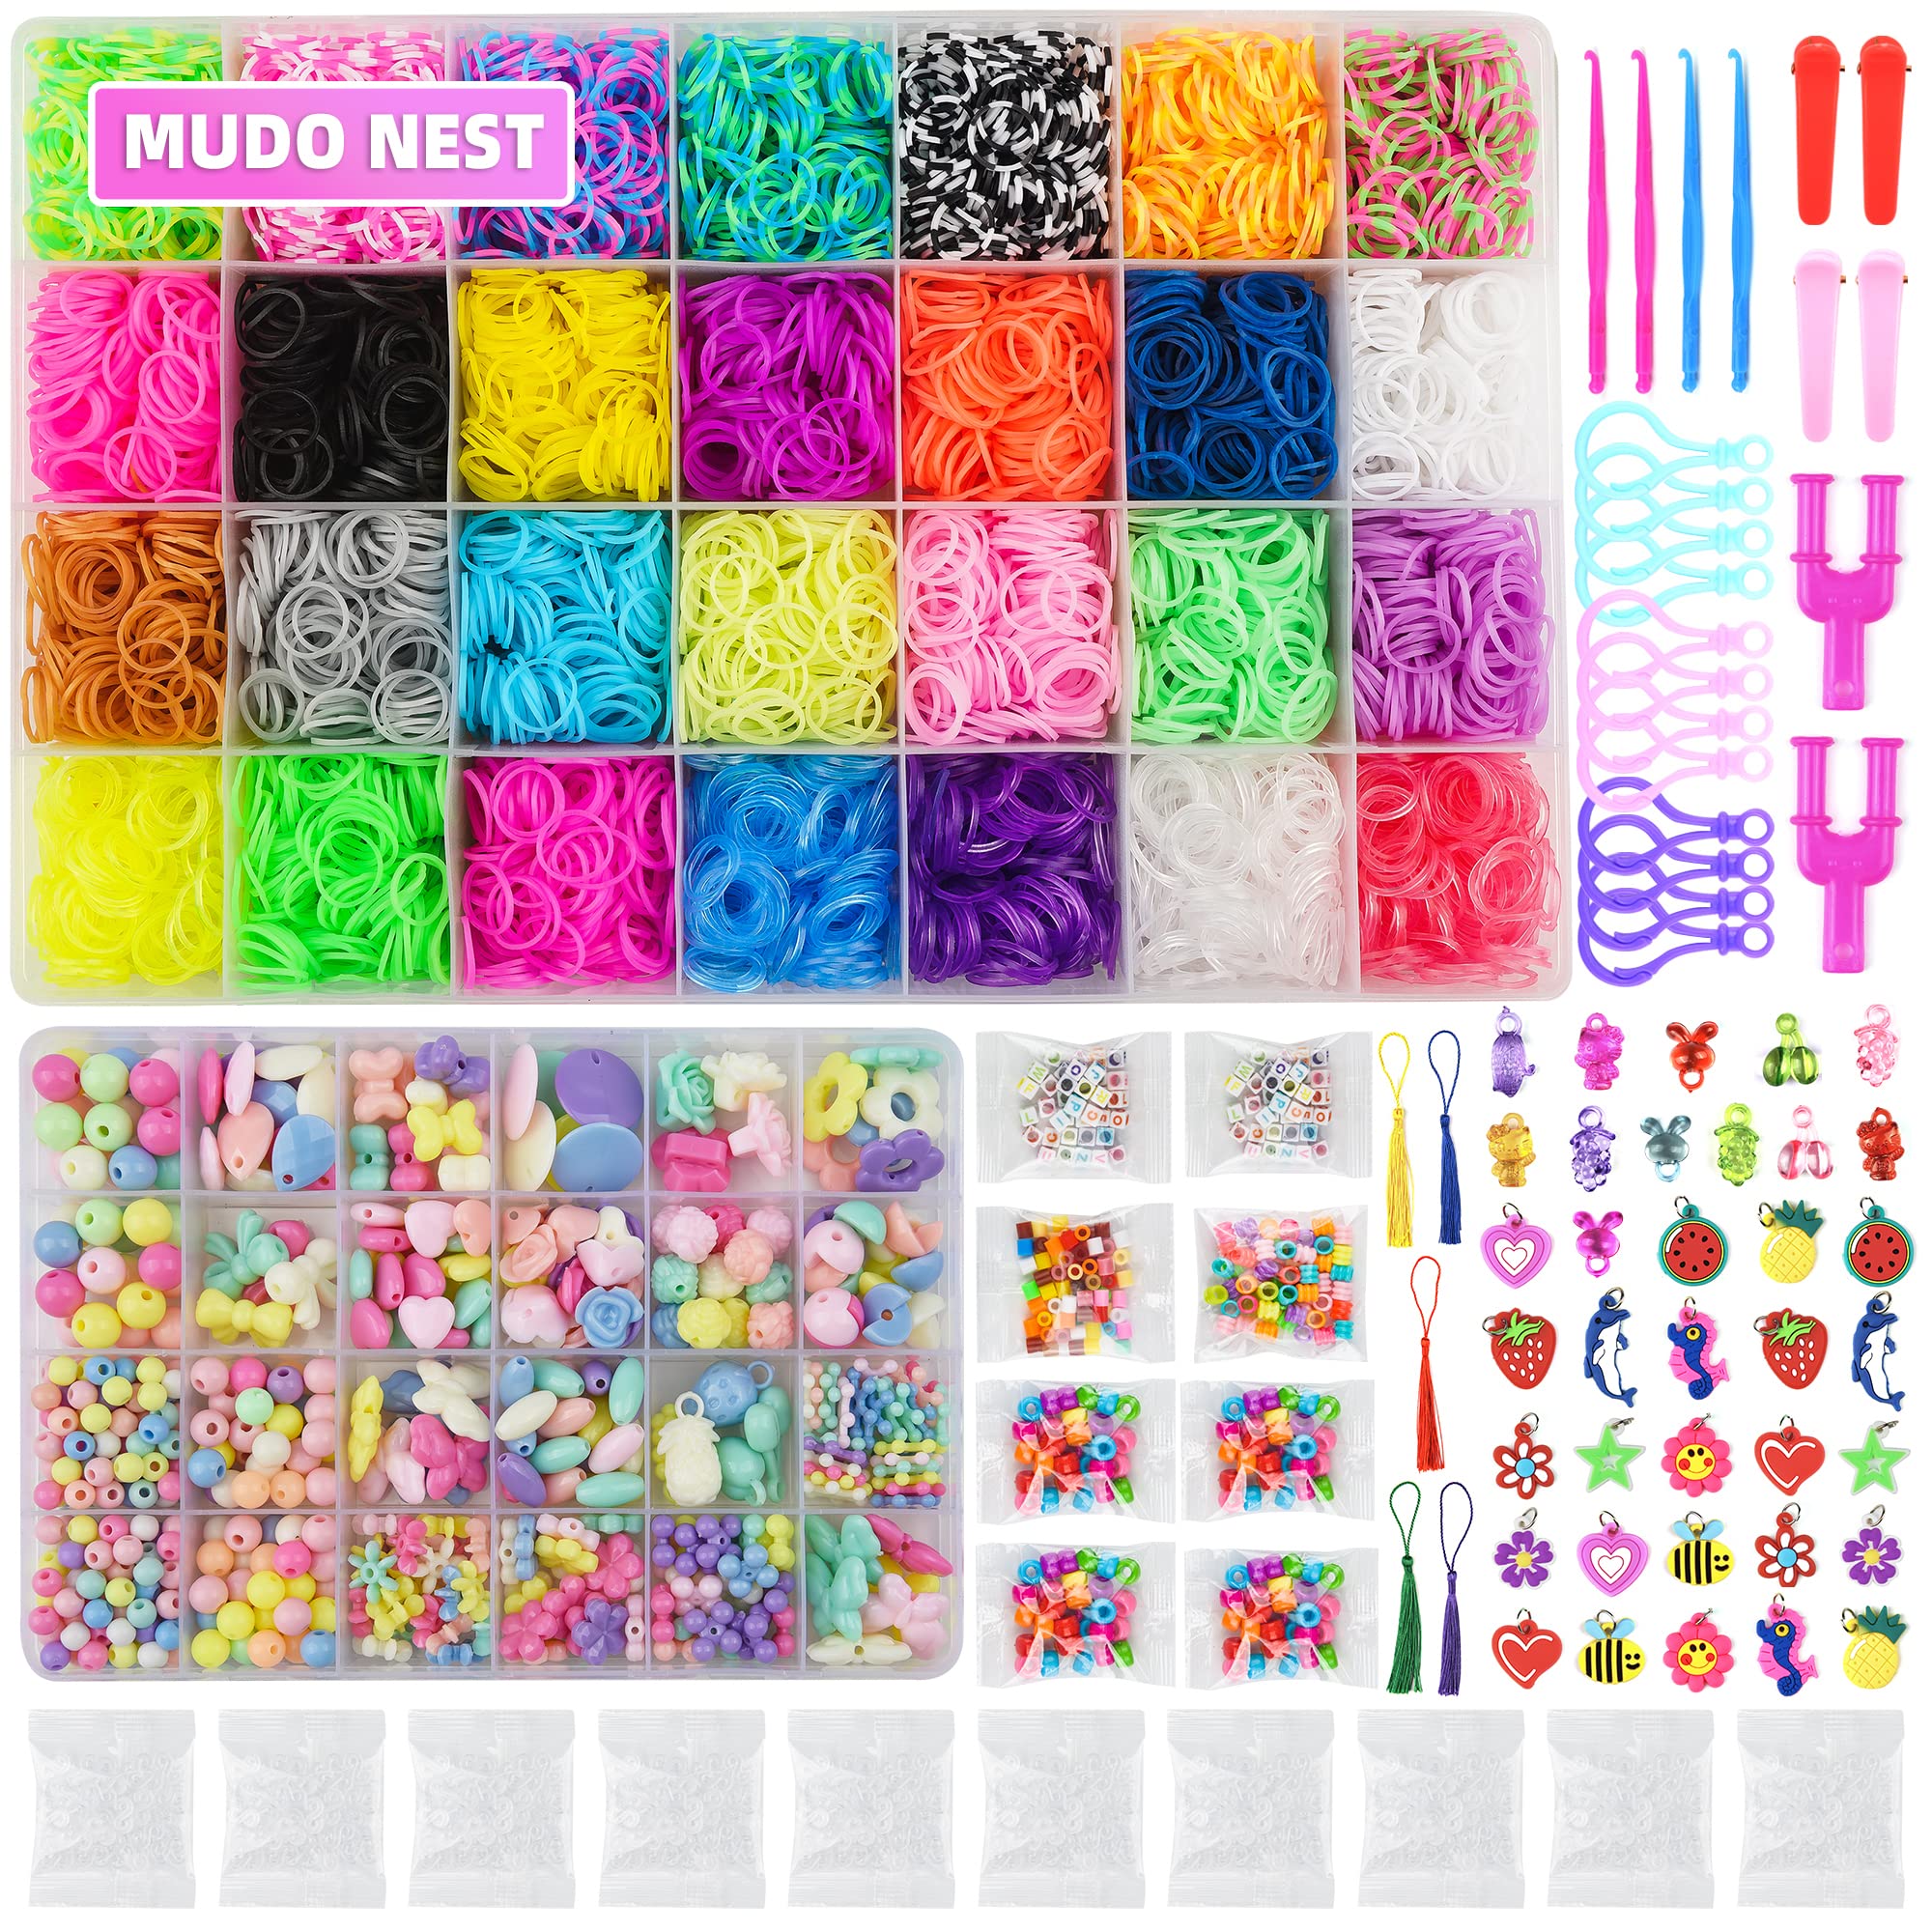 MUDO NEST 18000+ Loom Bands Kit: DIY Rubber Bands Kits, 500 Clips